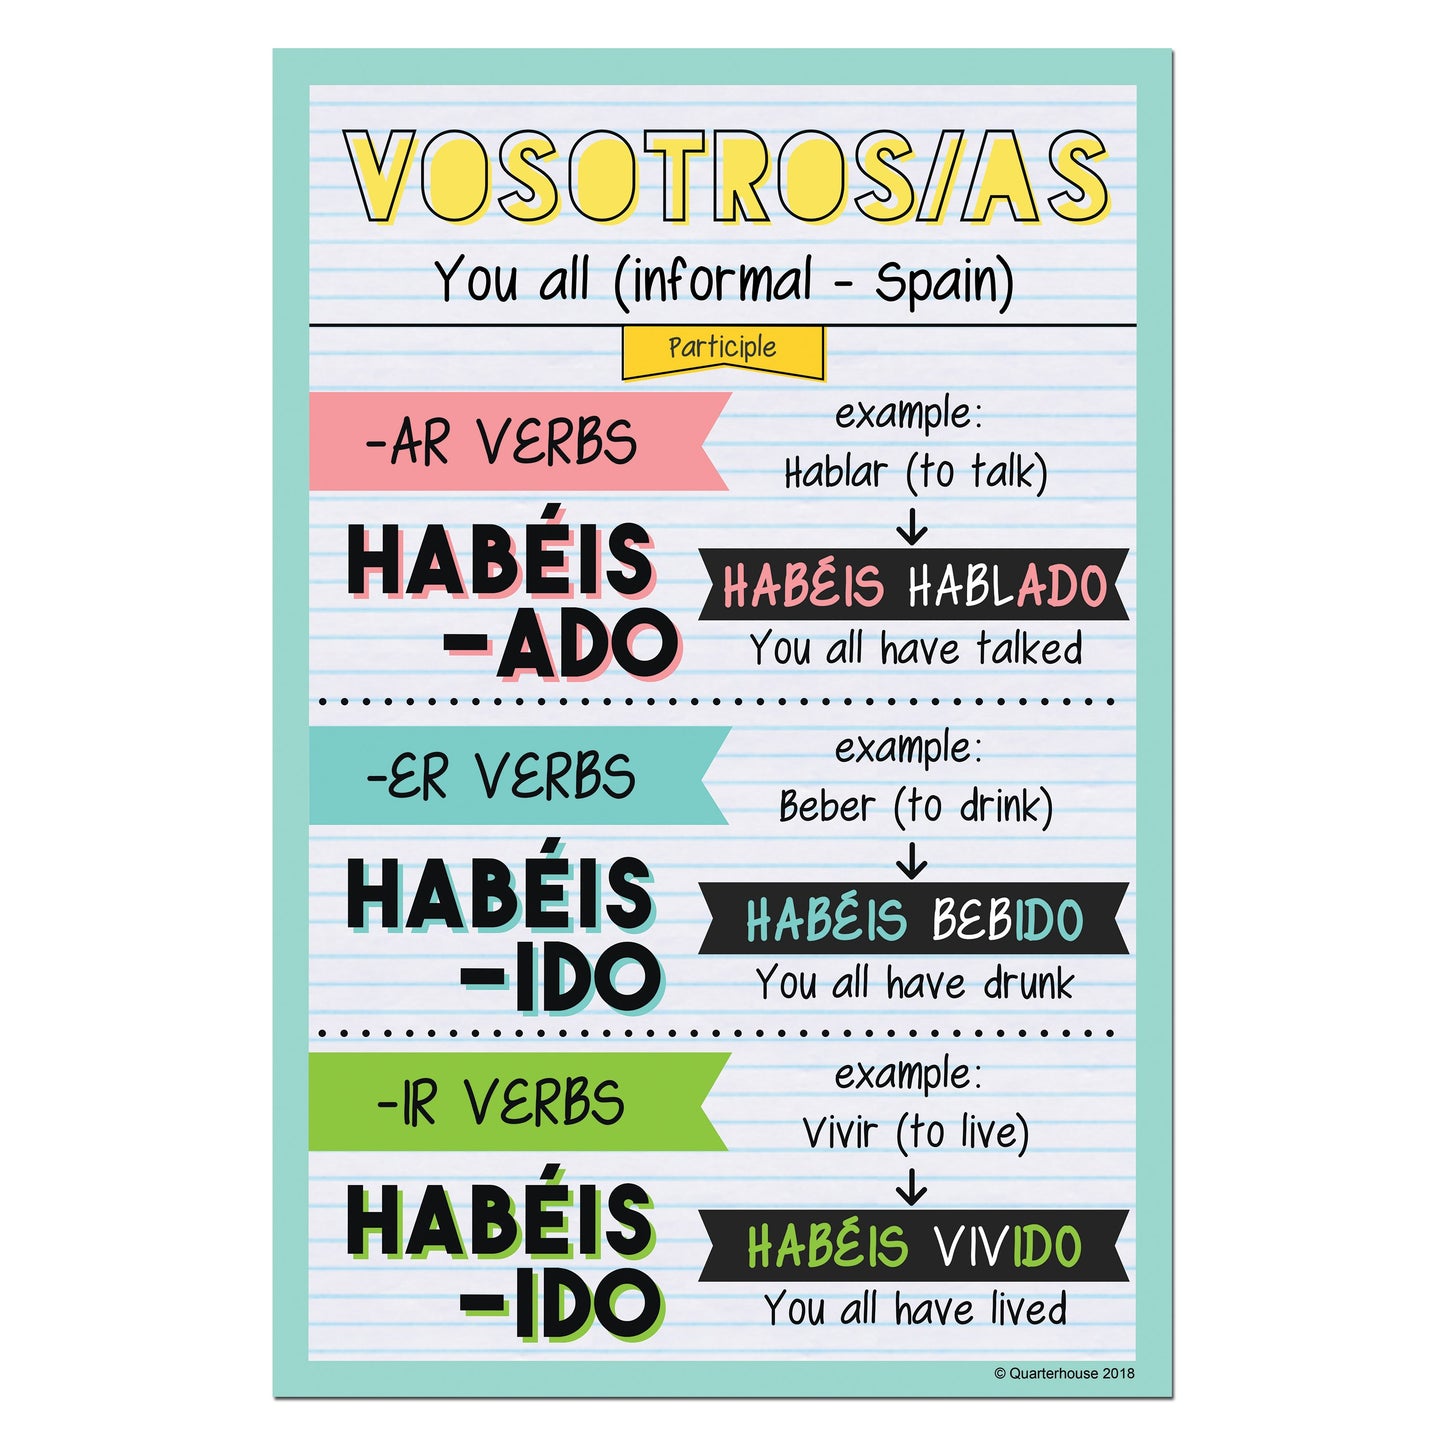 Quarterhouse Vosotros - Participle Spanish Verb Conjugation Poster, Spanish and ESL Classroom Materials for Teachers